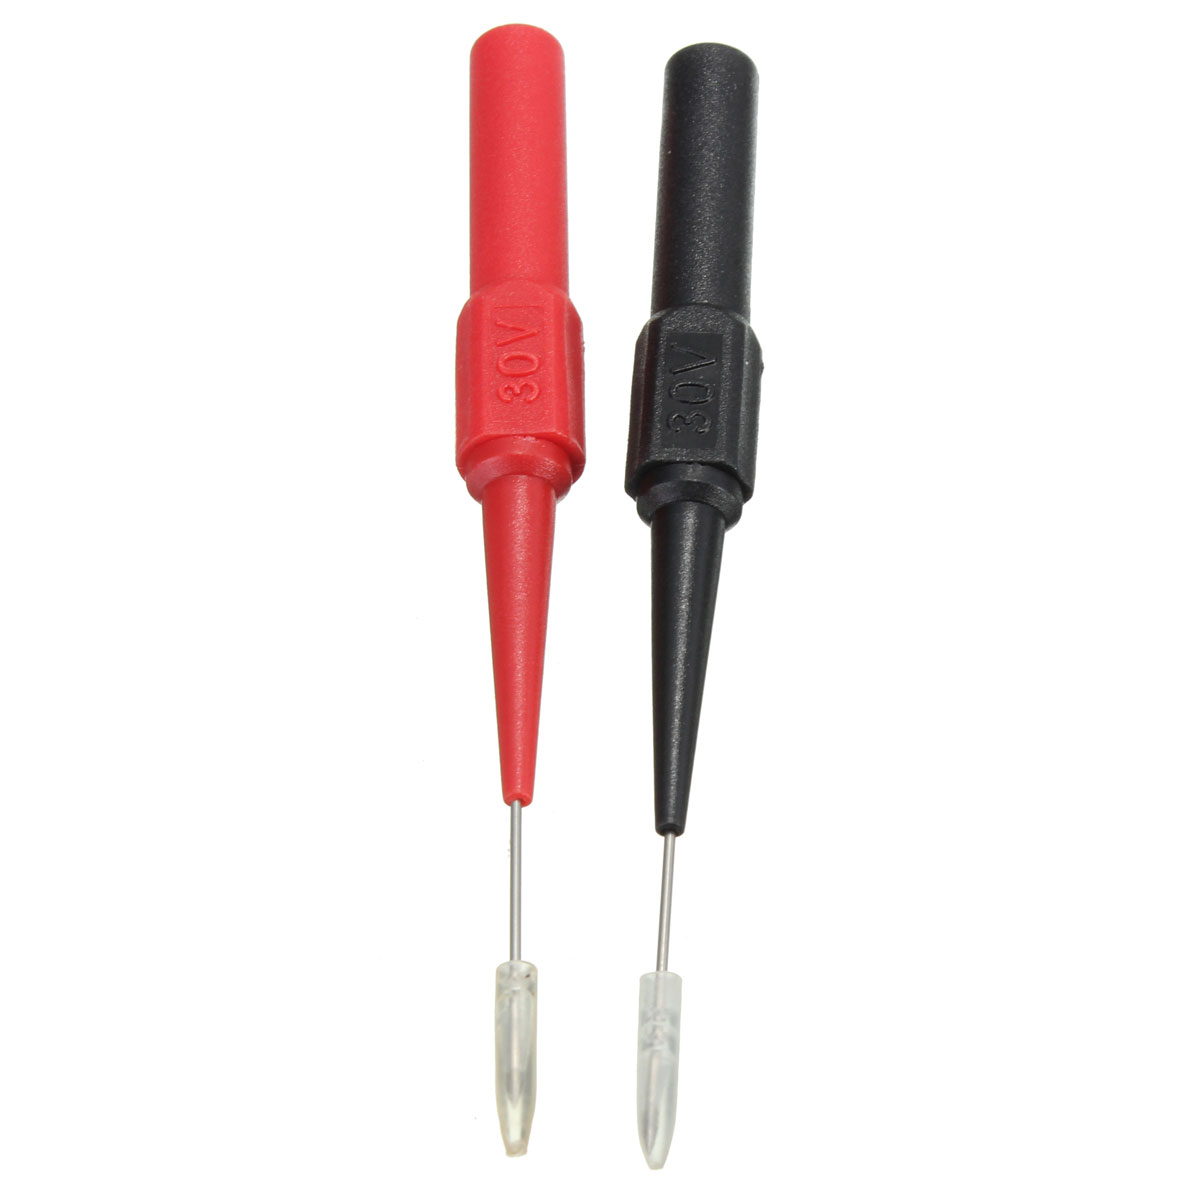 DGZZI 4PCS Insulation Piercing Needle Non-Destructive Multimeter Test Probes 30V-60V 2 PCS Red and 2 PCS Black 